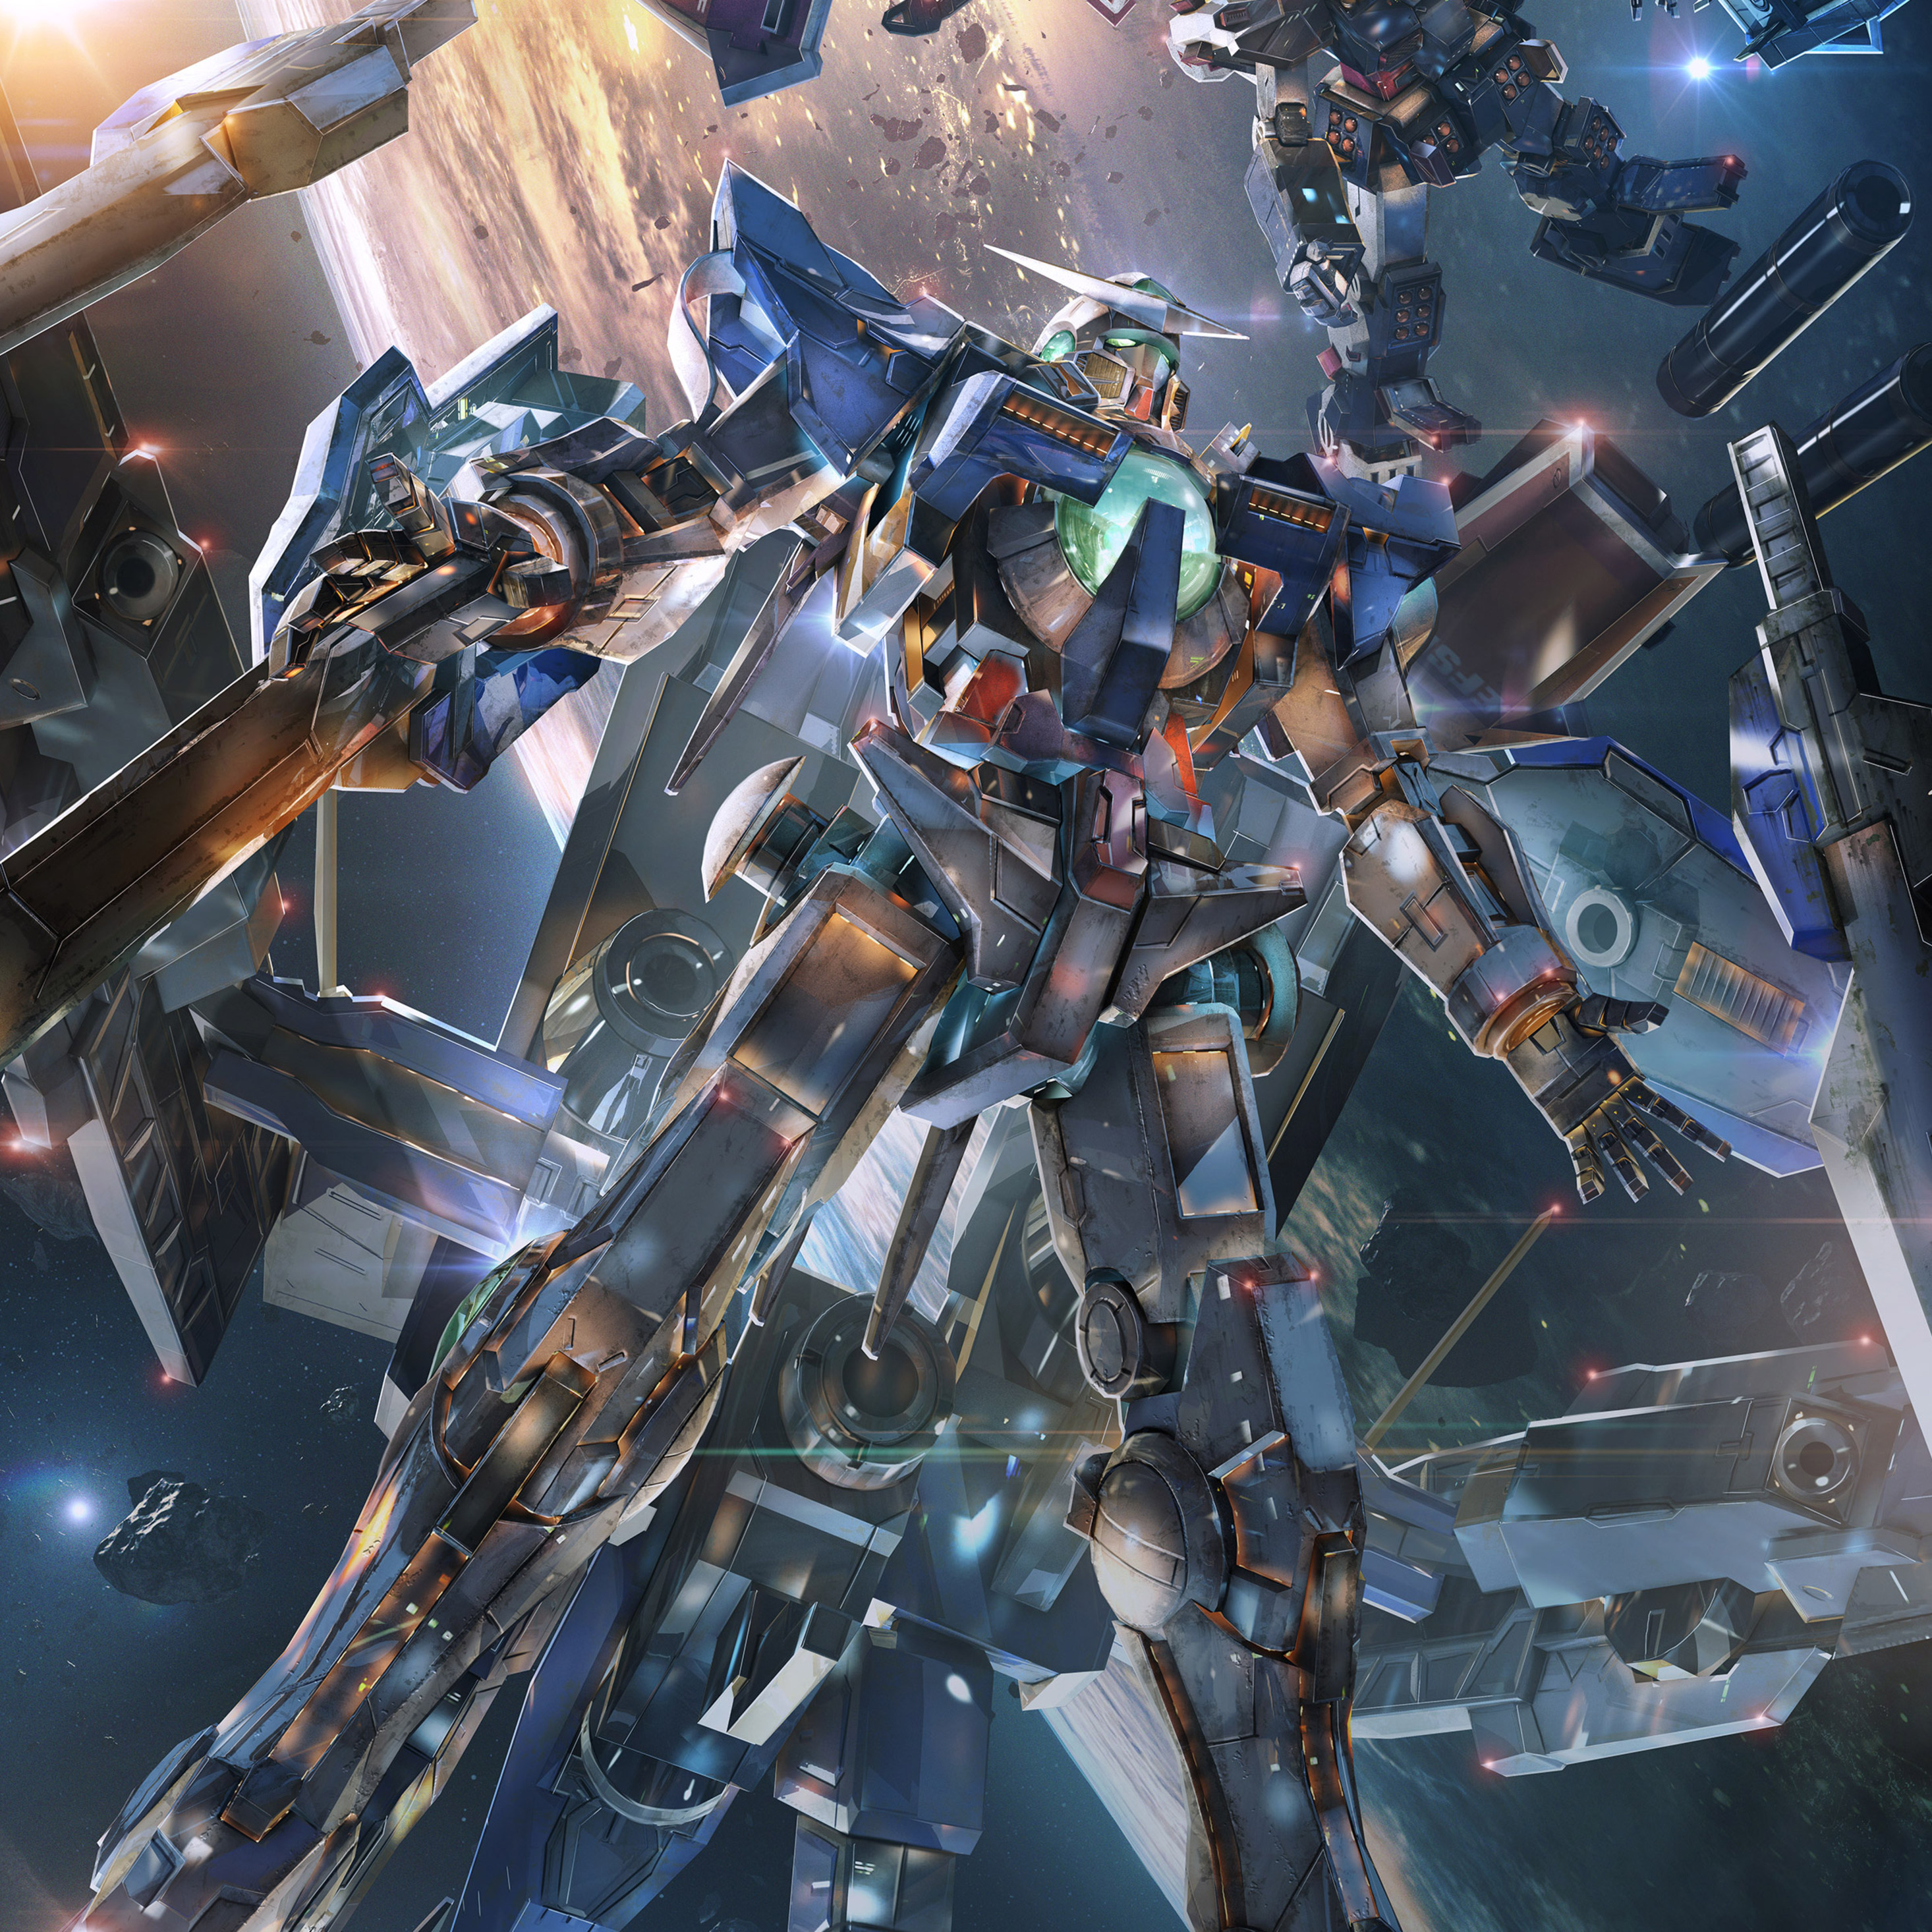 Gundam Wallpapers